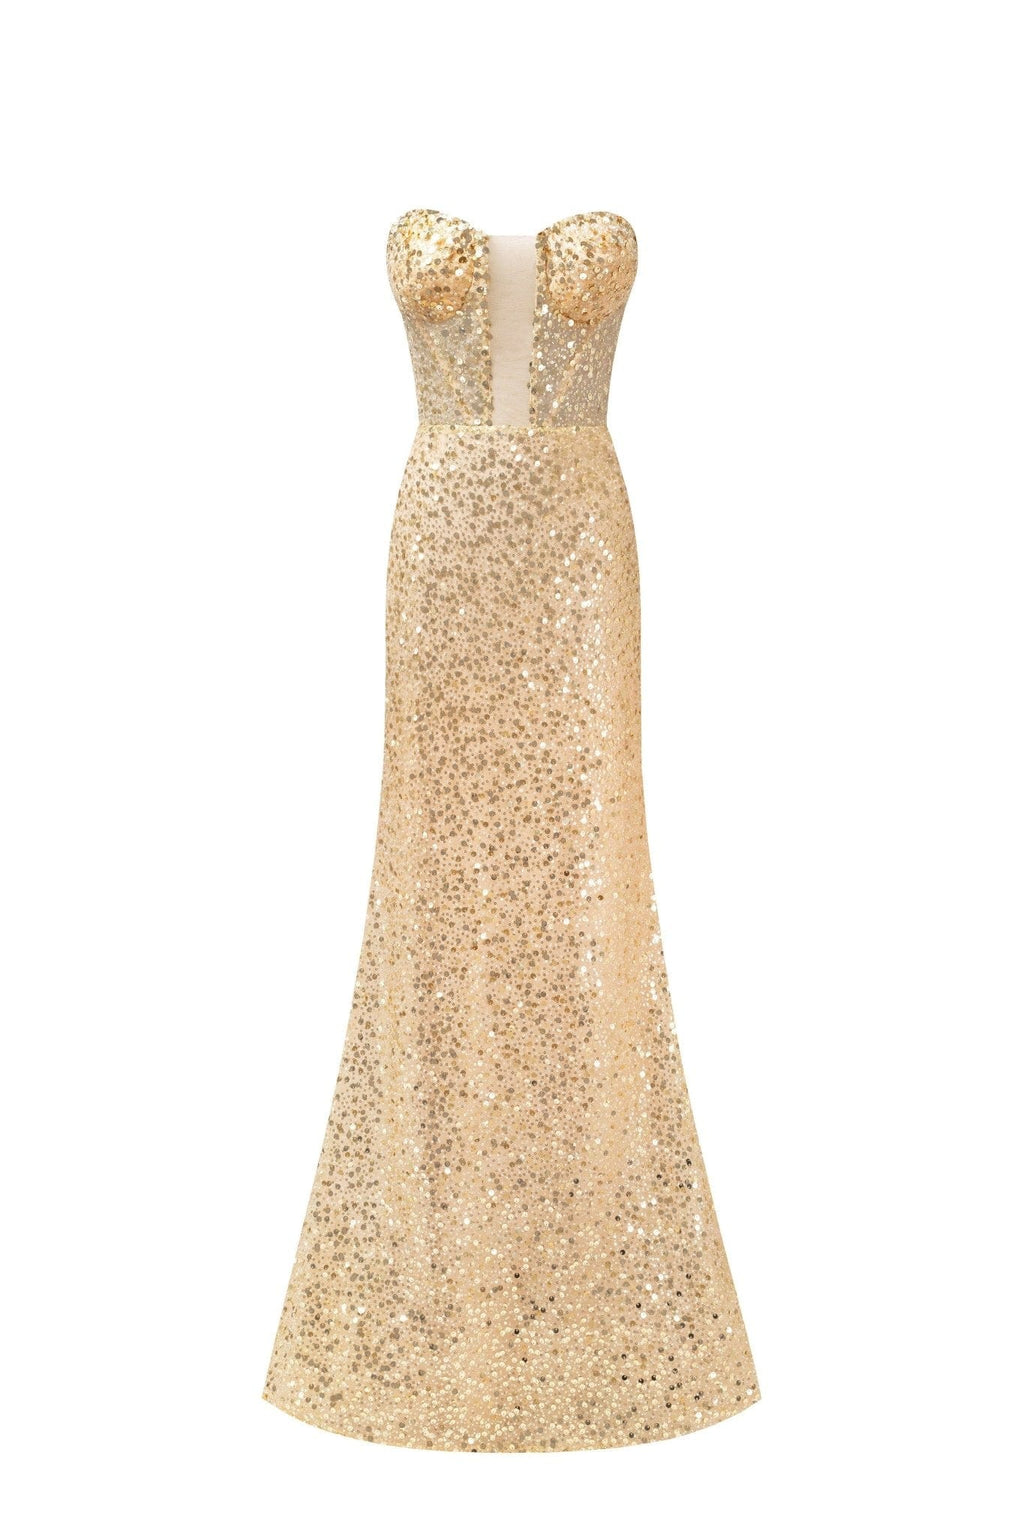 SoAyle Advanced Custom Heavy Handmade Gold Bra Light Extravagant Pompous  Skirt Prom Party Evening Dress YP2951